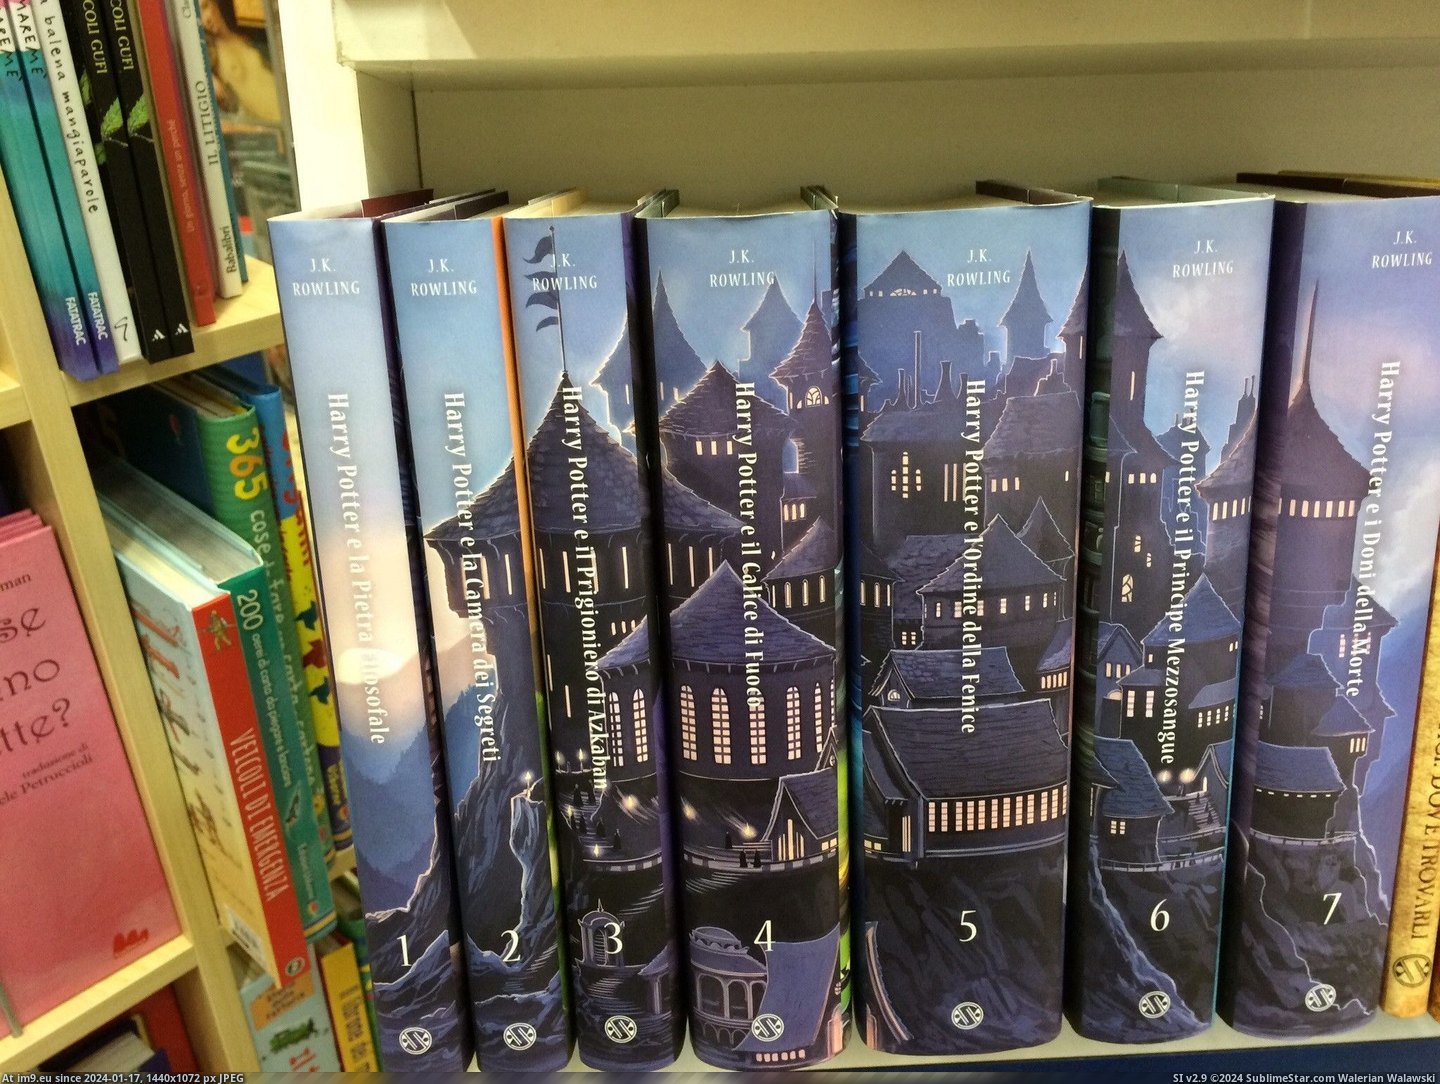 #Series #Edition #Italian #Books #Aligned #Forms #Castle #Harry #Potter [Mildlyinteresting] This Italian edition of the Harry Potter series forms a castle when the books are aligned Pic. (Bild von album My r/MILDLYINTERESTING favs))